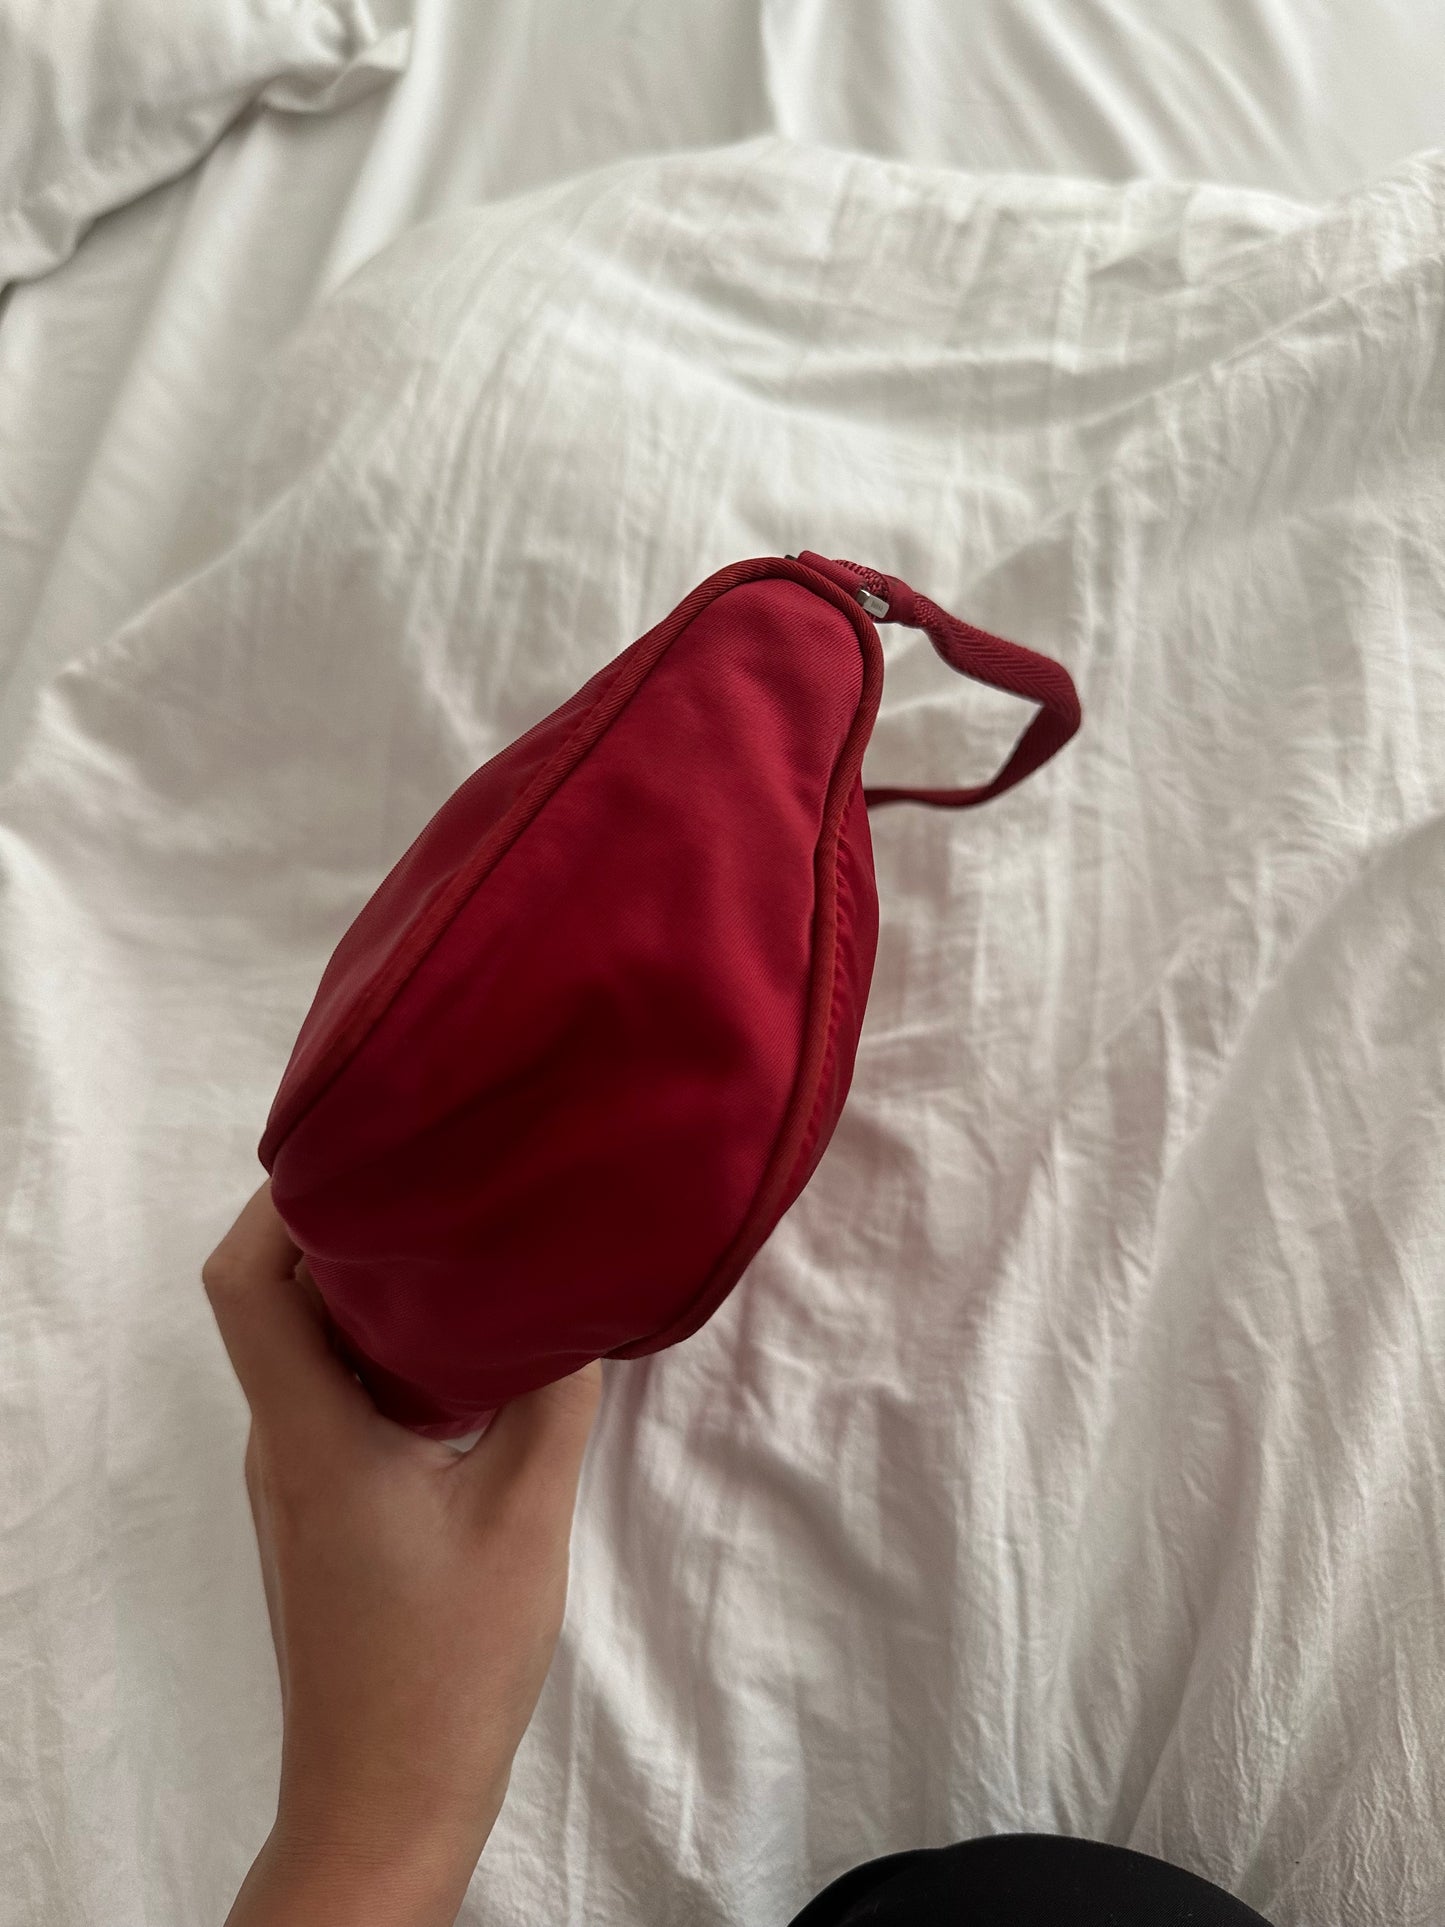 Prada Red Nylon Shoulder Bag